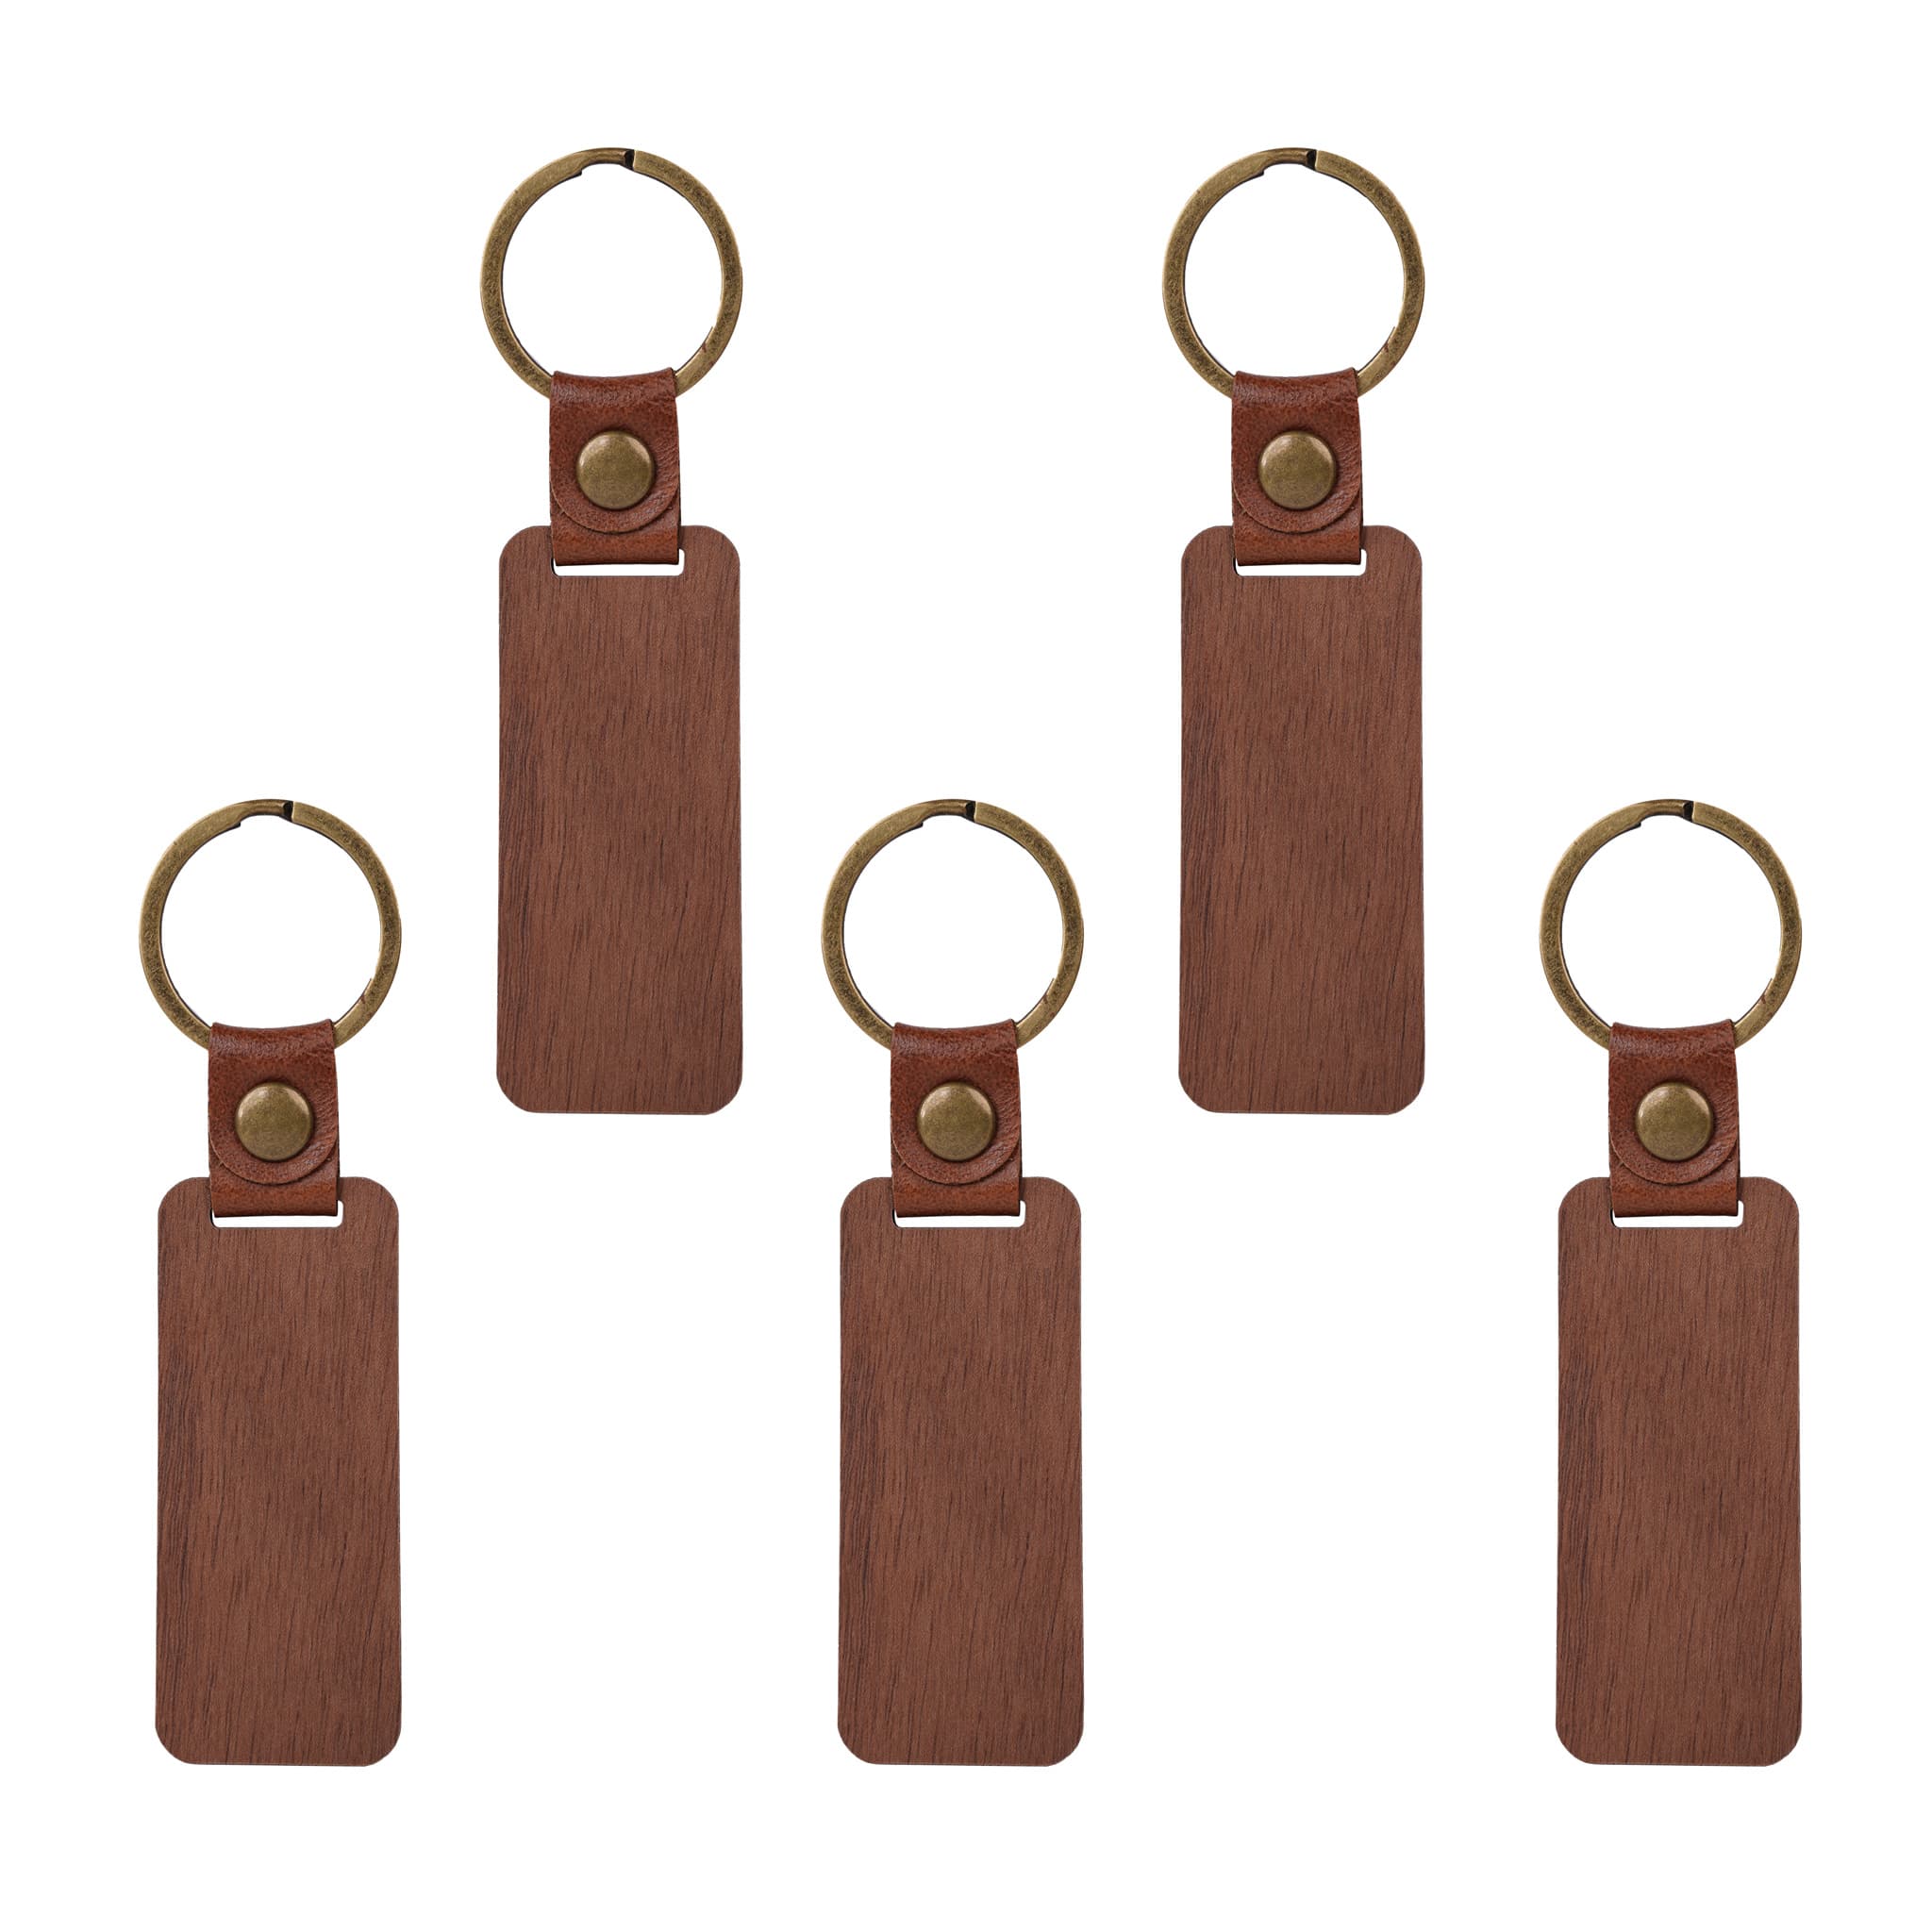 Walnut rectangular keychain(5 Pcs)